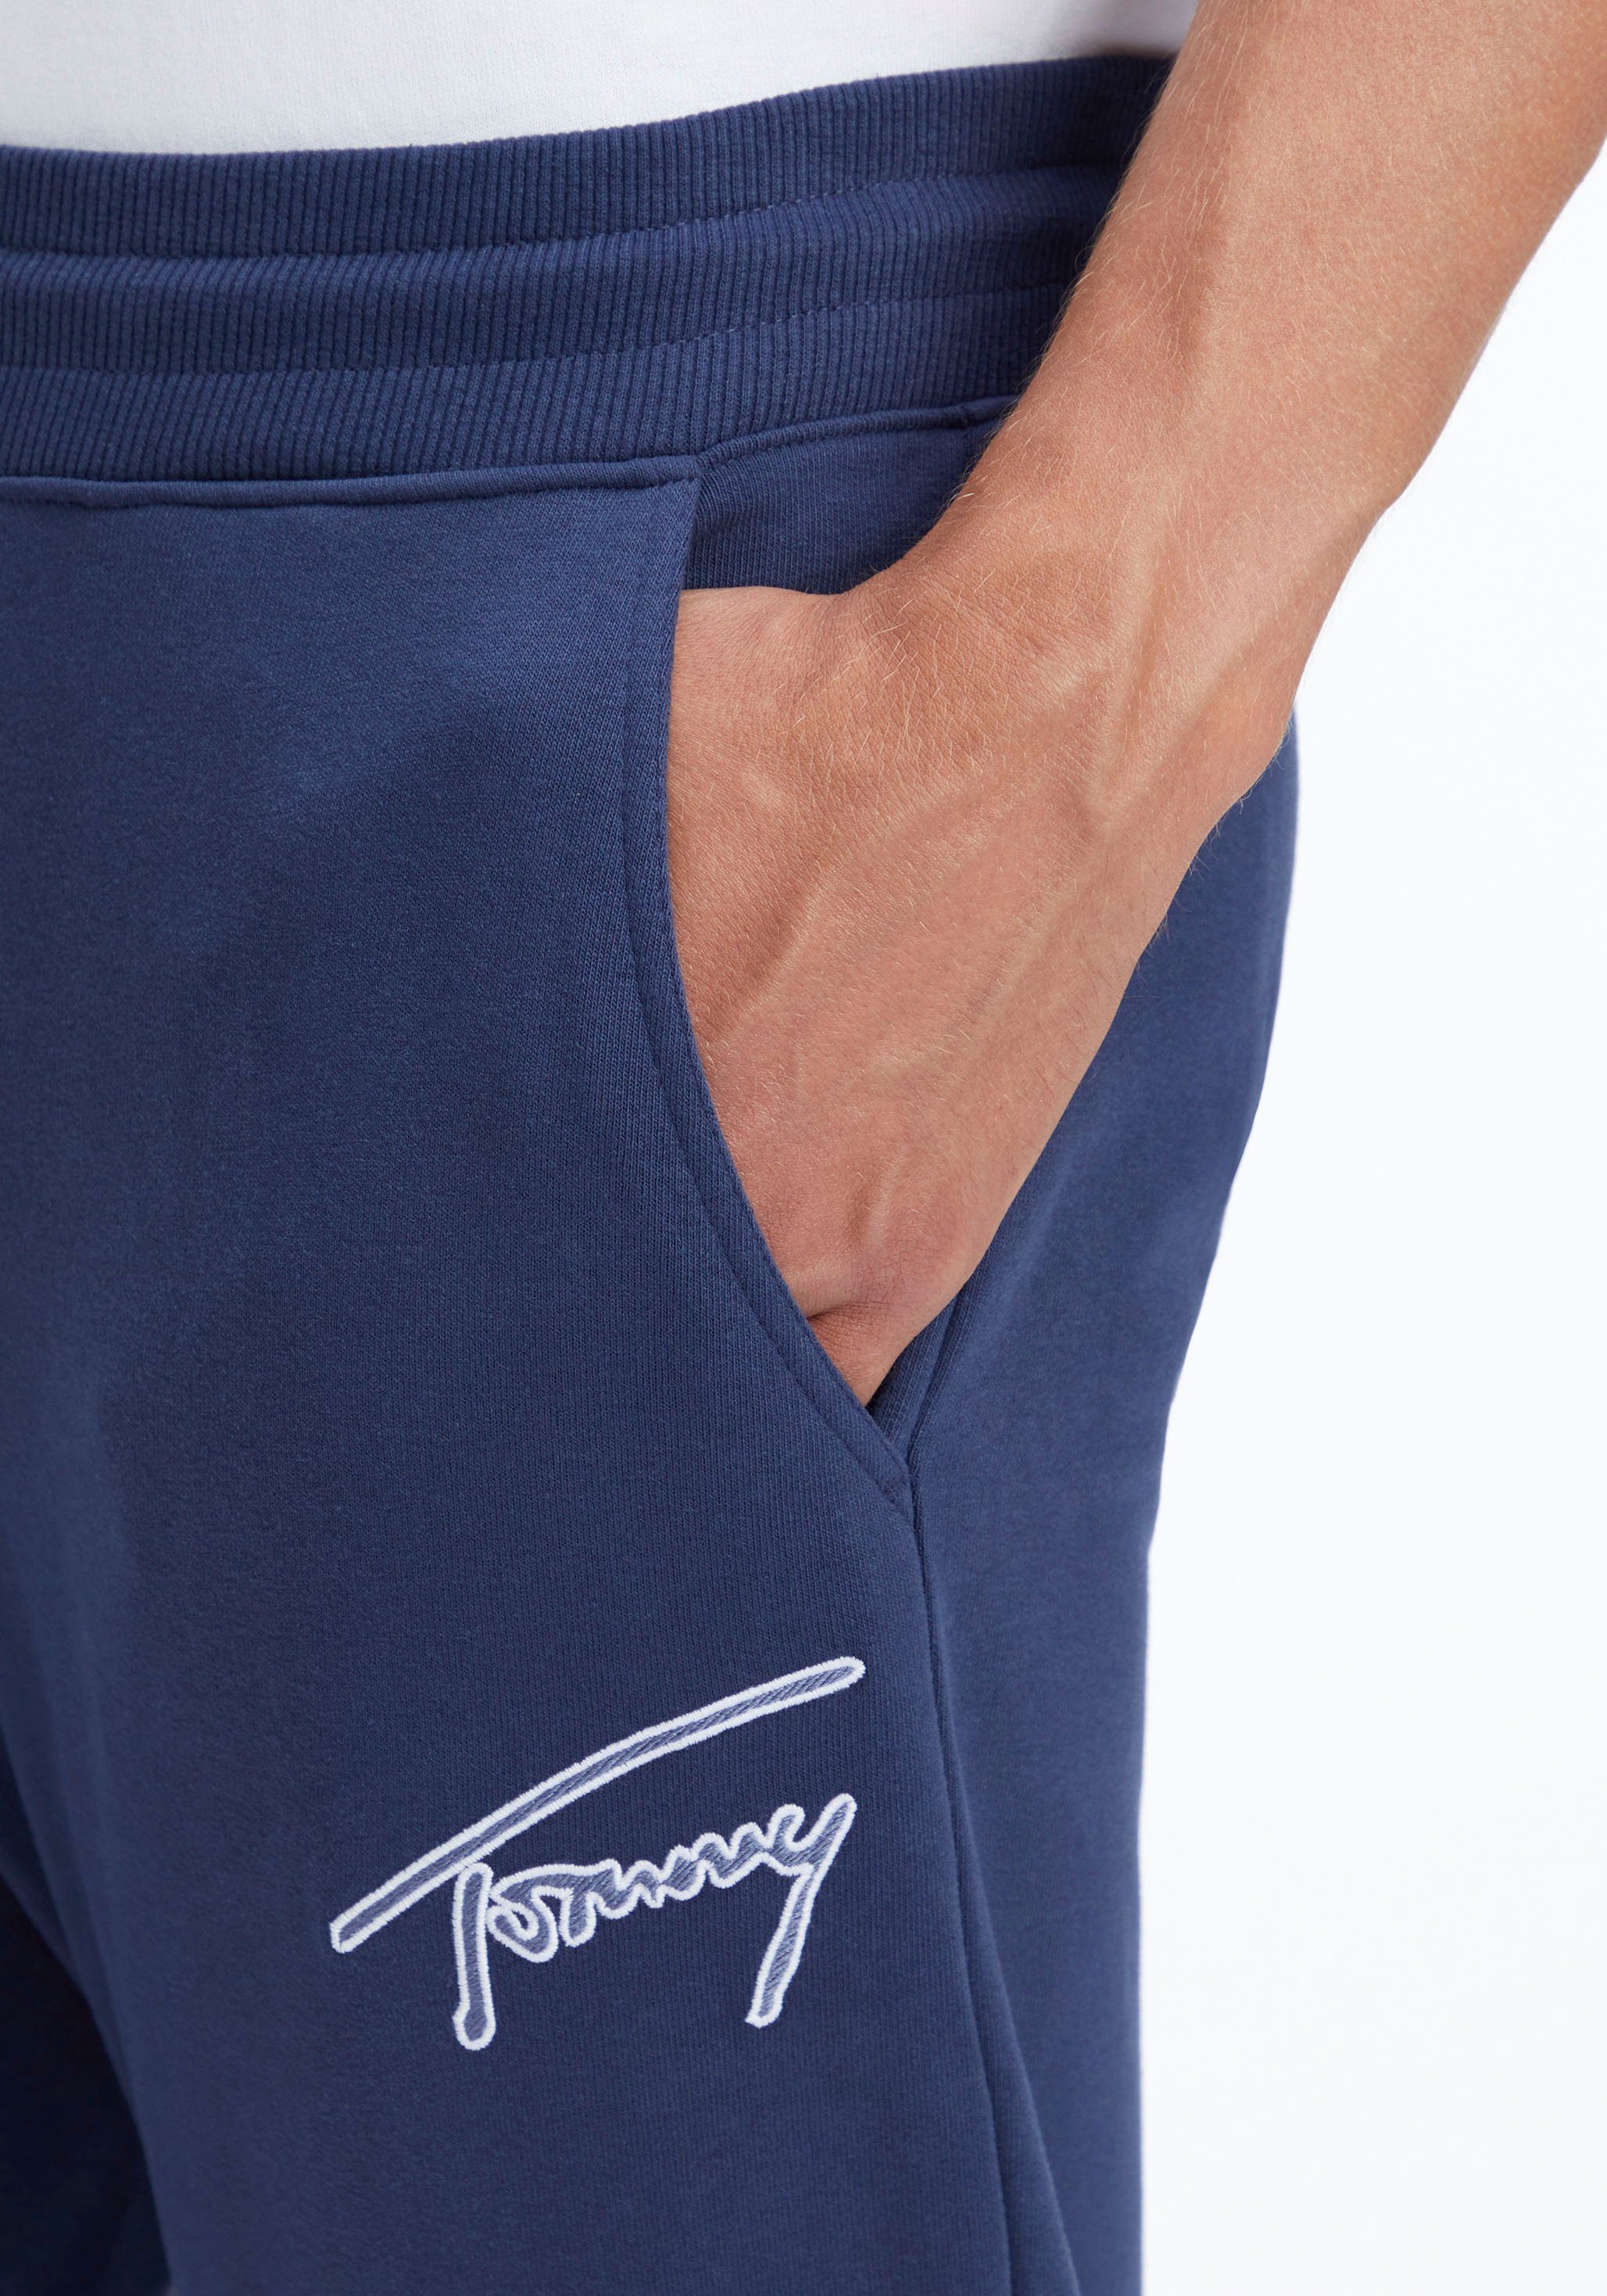 SWEATPANTS Kordelzug Tommy Twilight Jeans SIGNATURE mit REG TJM Sweatpants Navy